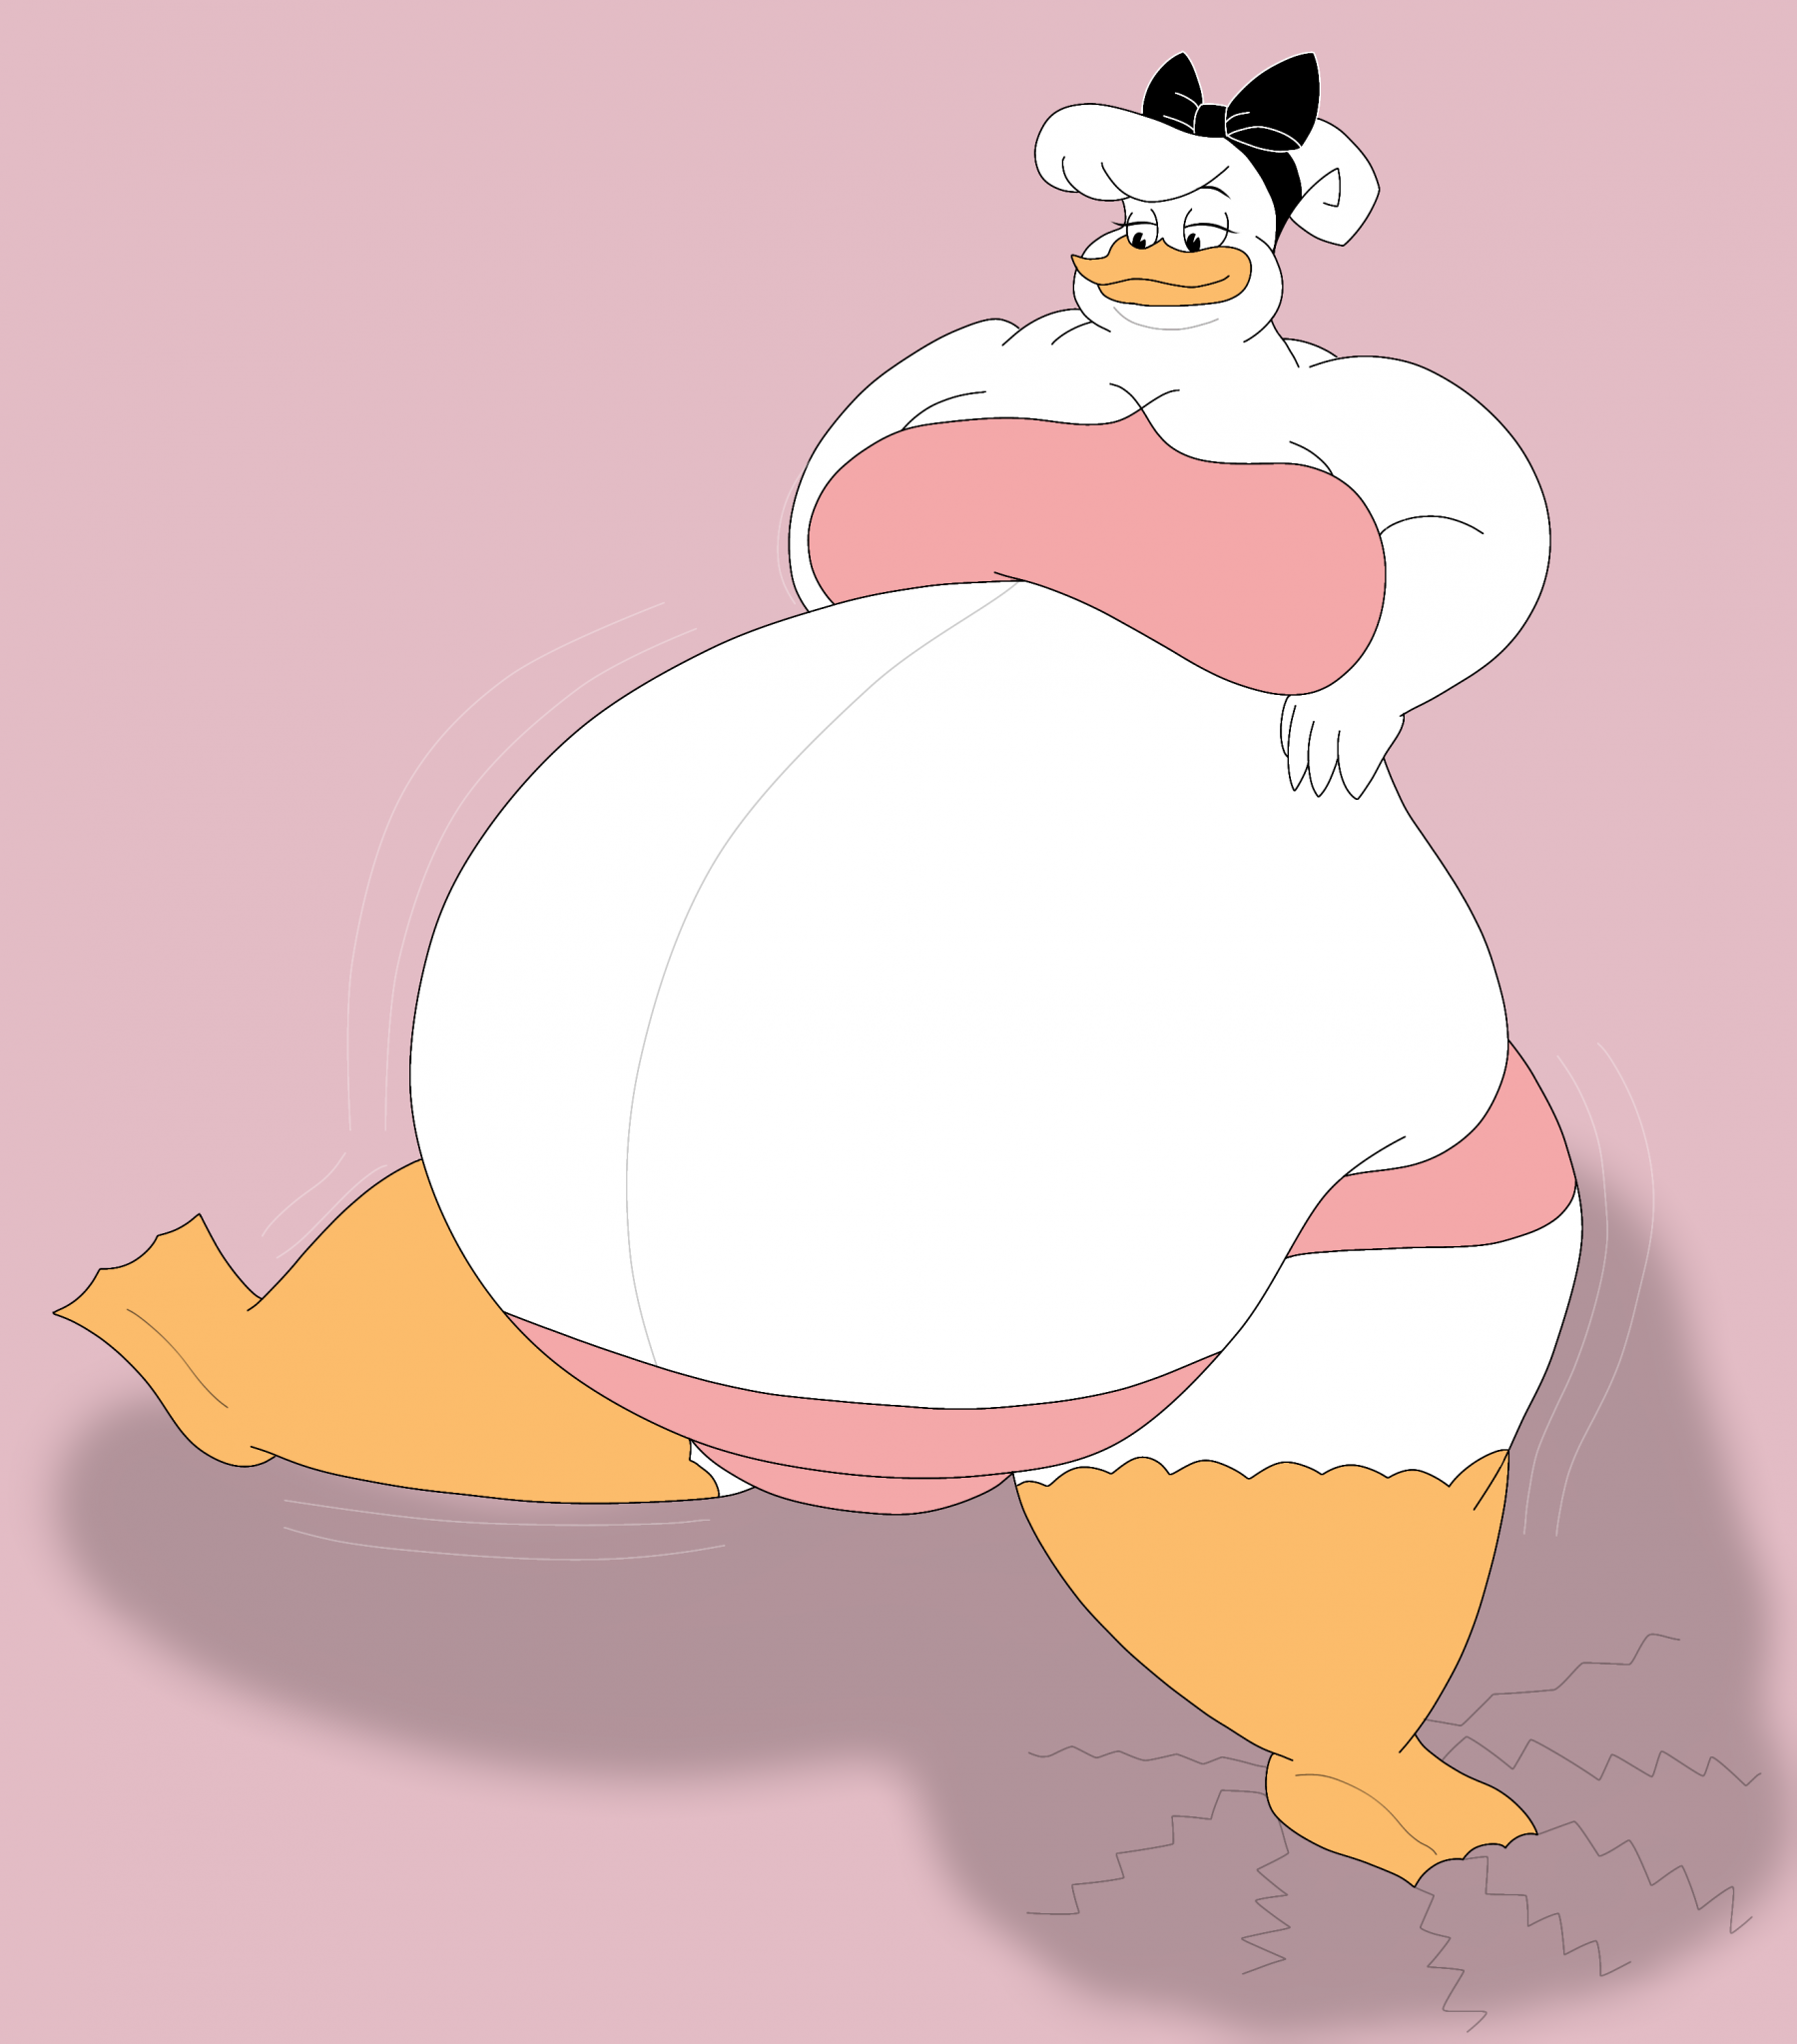 Farmer Daisy Duck by Disneyfanwithautism on DeviantArt